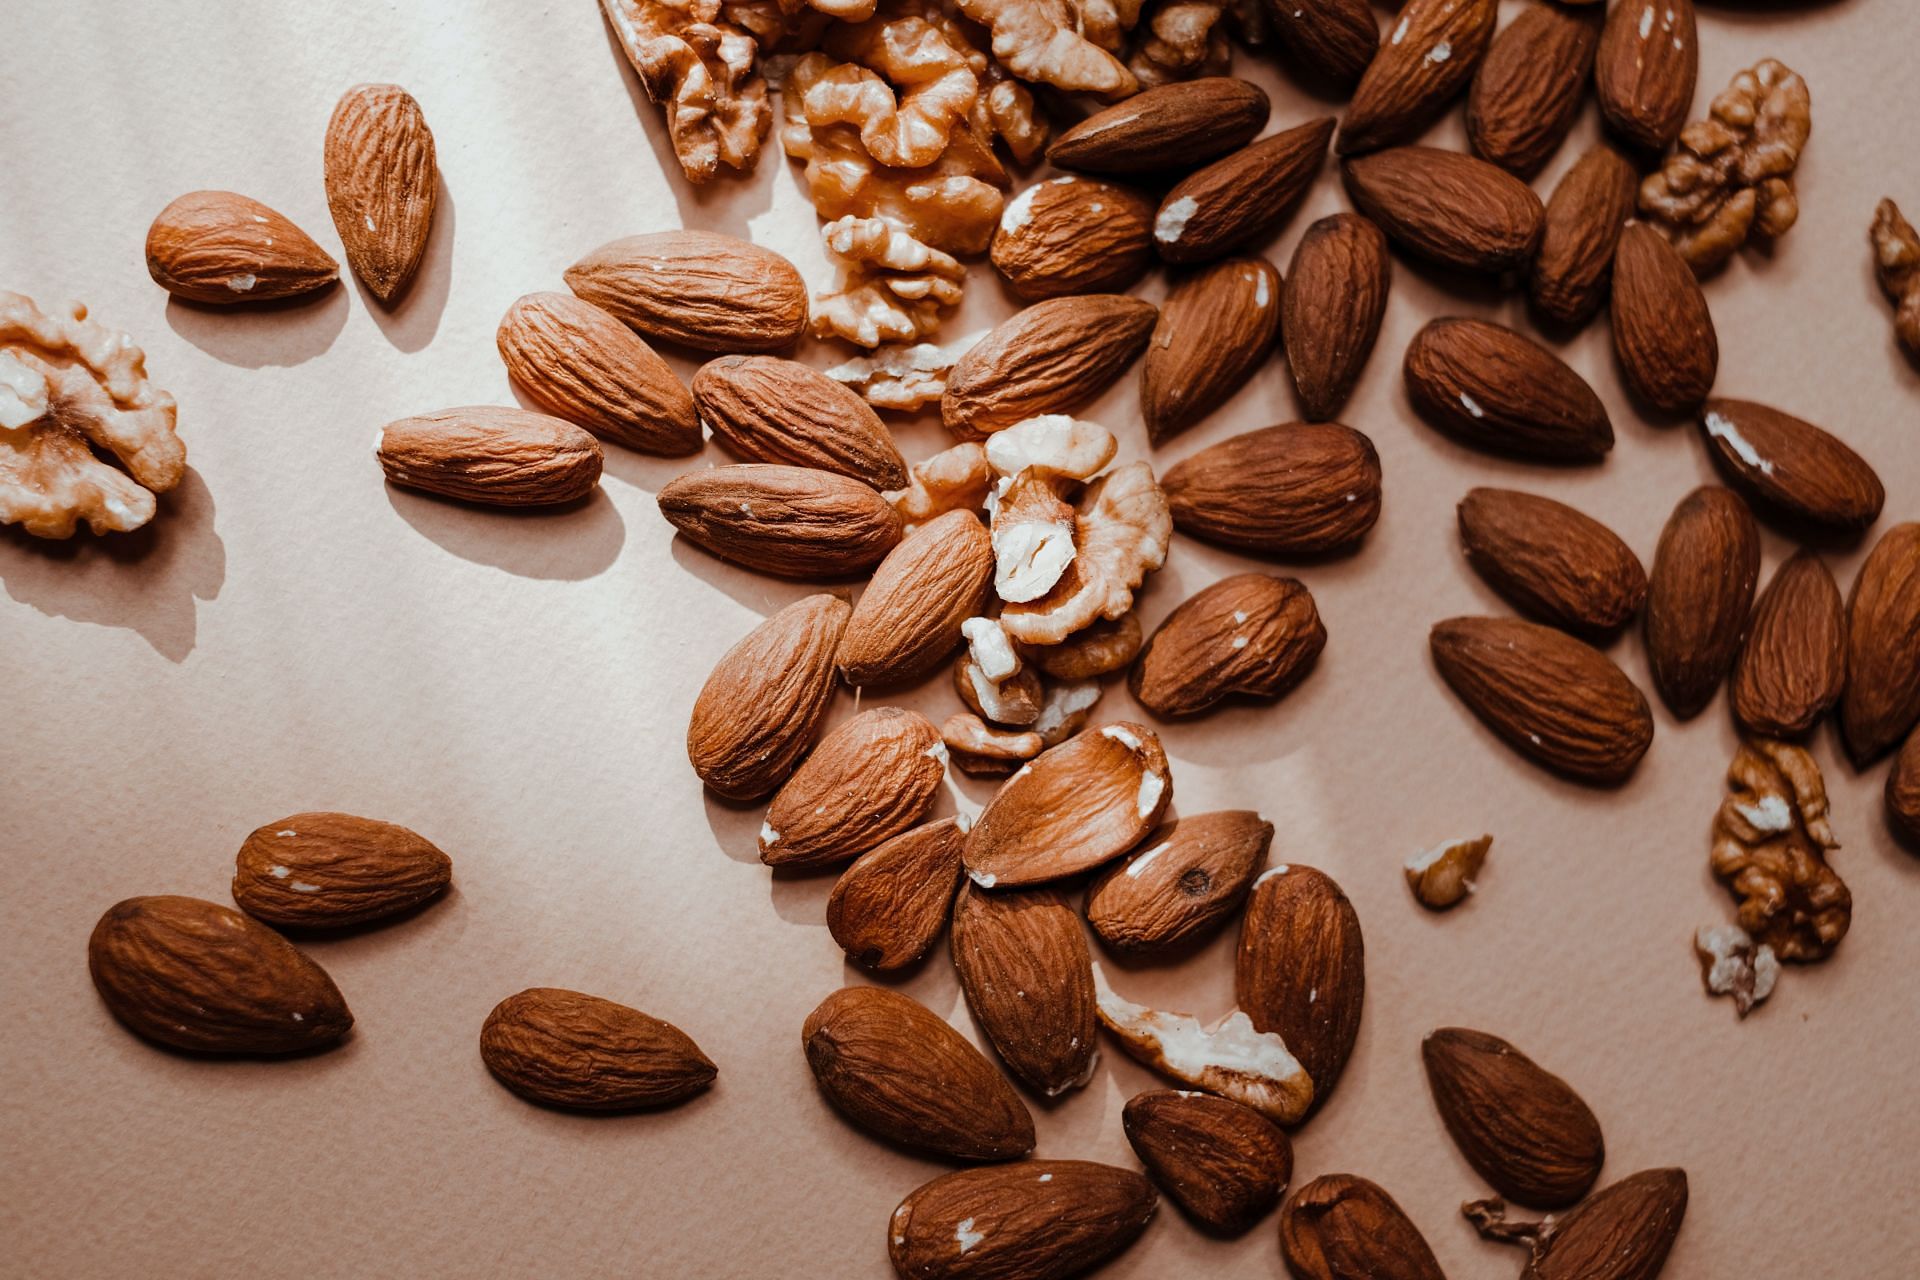 nuts and seeds help in loweing your cholesterol. (image via pexels / vie studio)